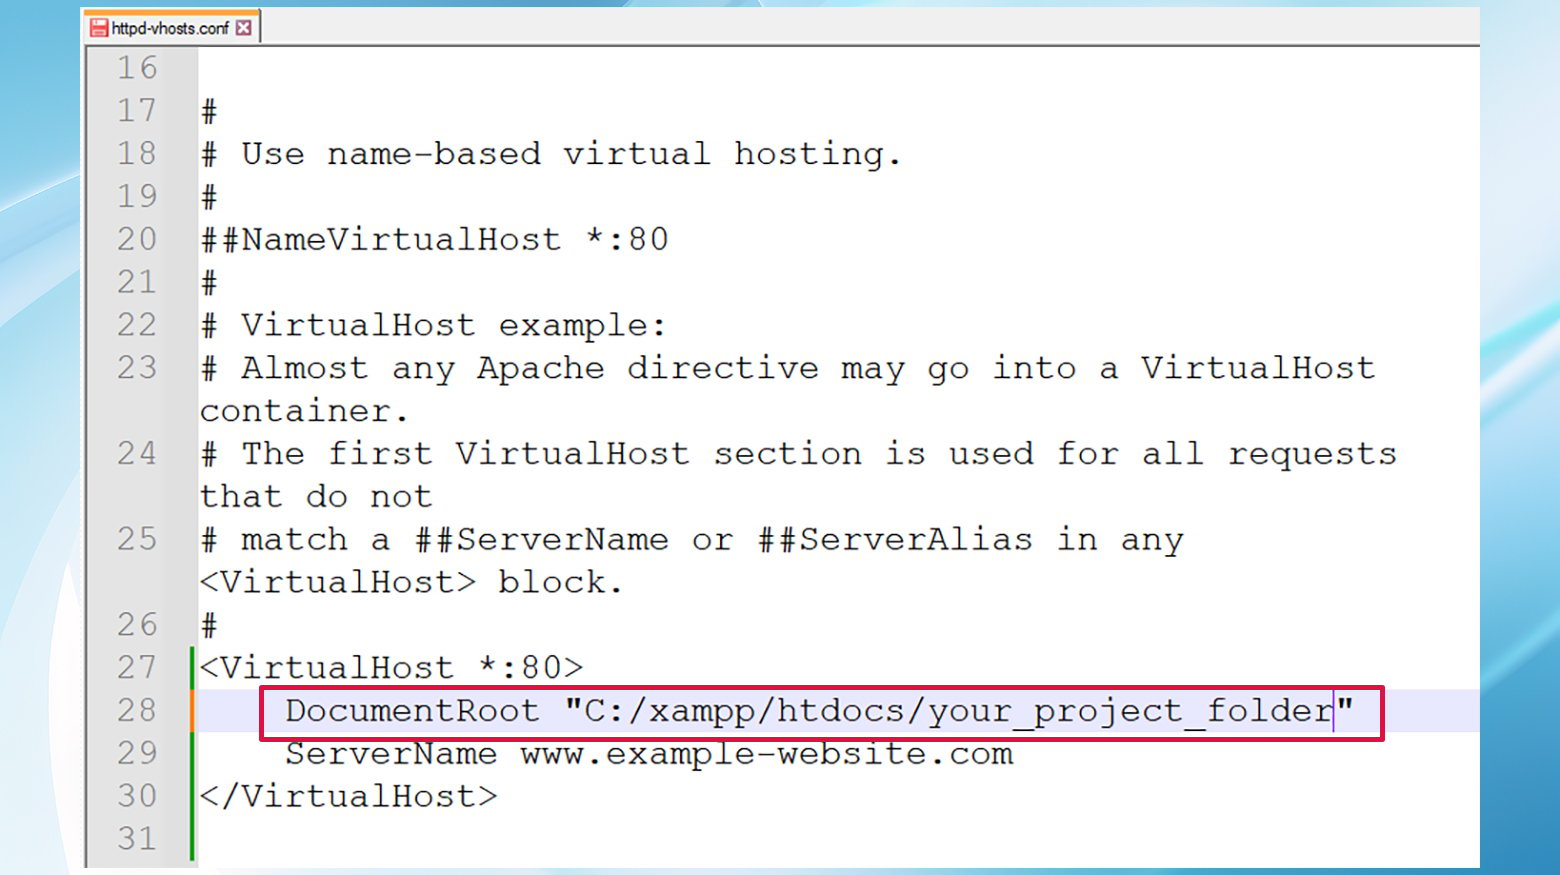 httpd-vhosts.conf 파일에서 DocumentRoot를 업데이트하면 localhost/index.php 오류를 해결할 수 있습니다.